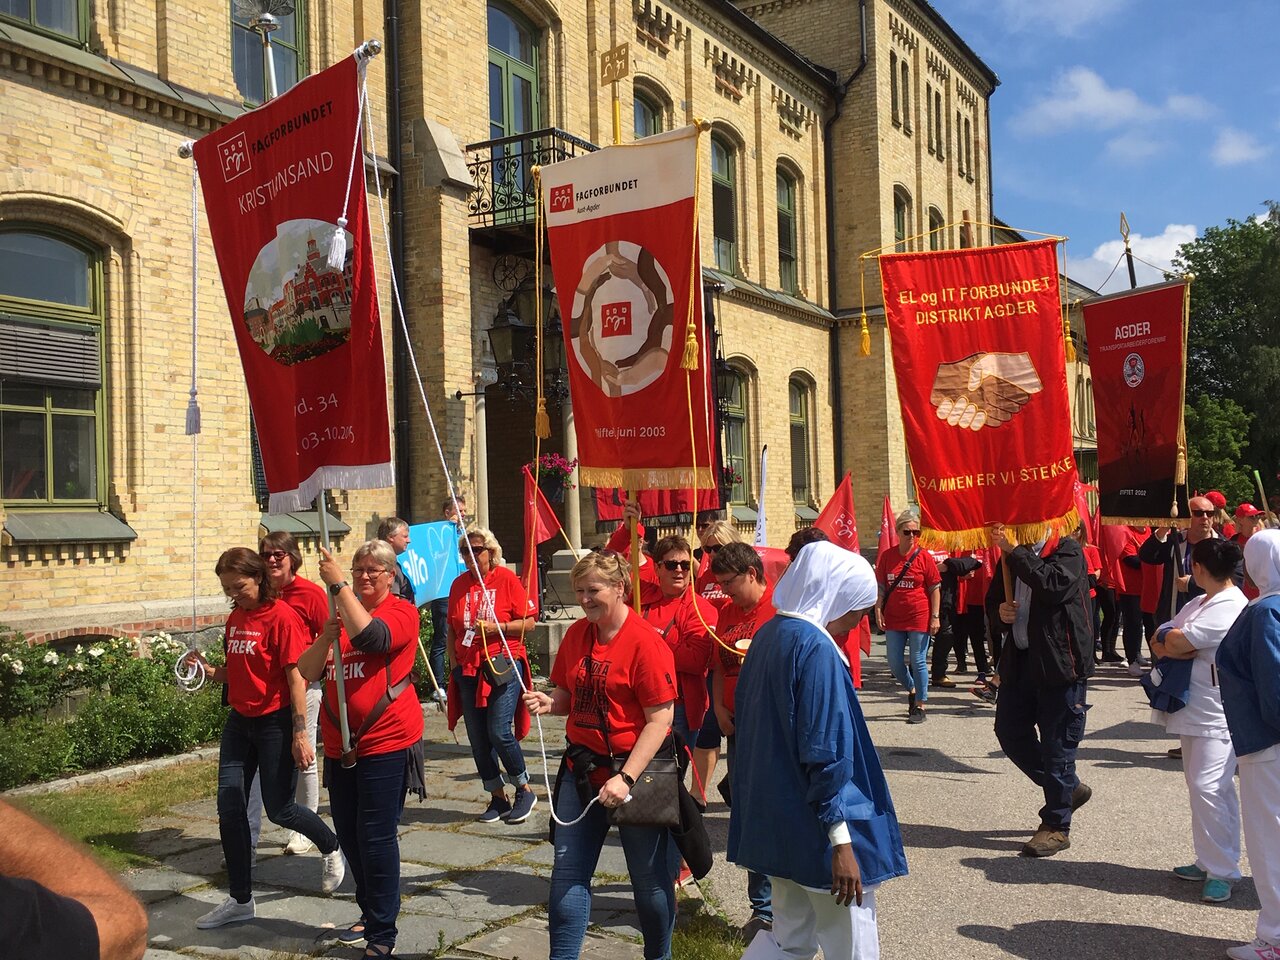 Streikende i Kristiansand